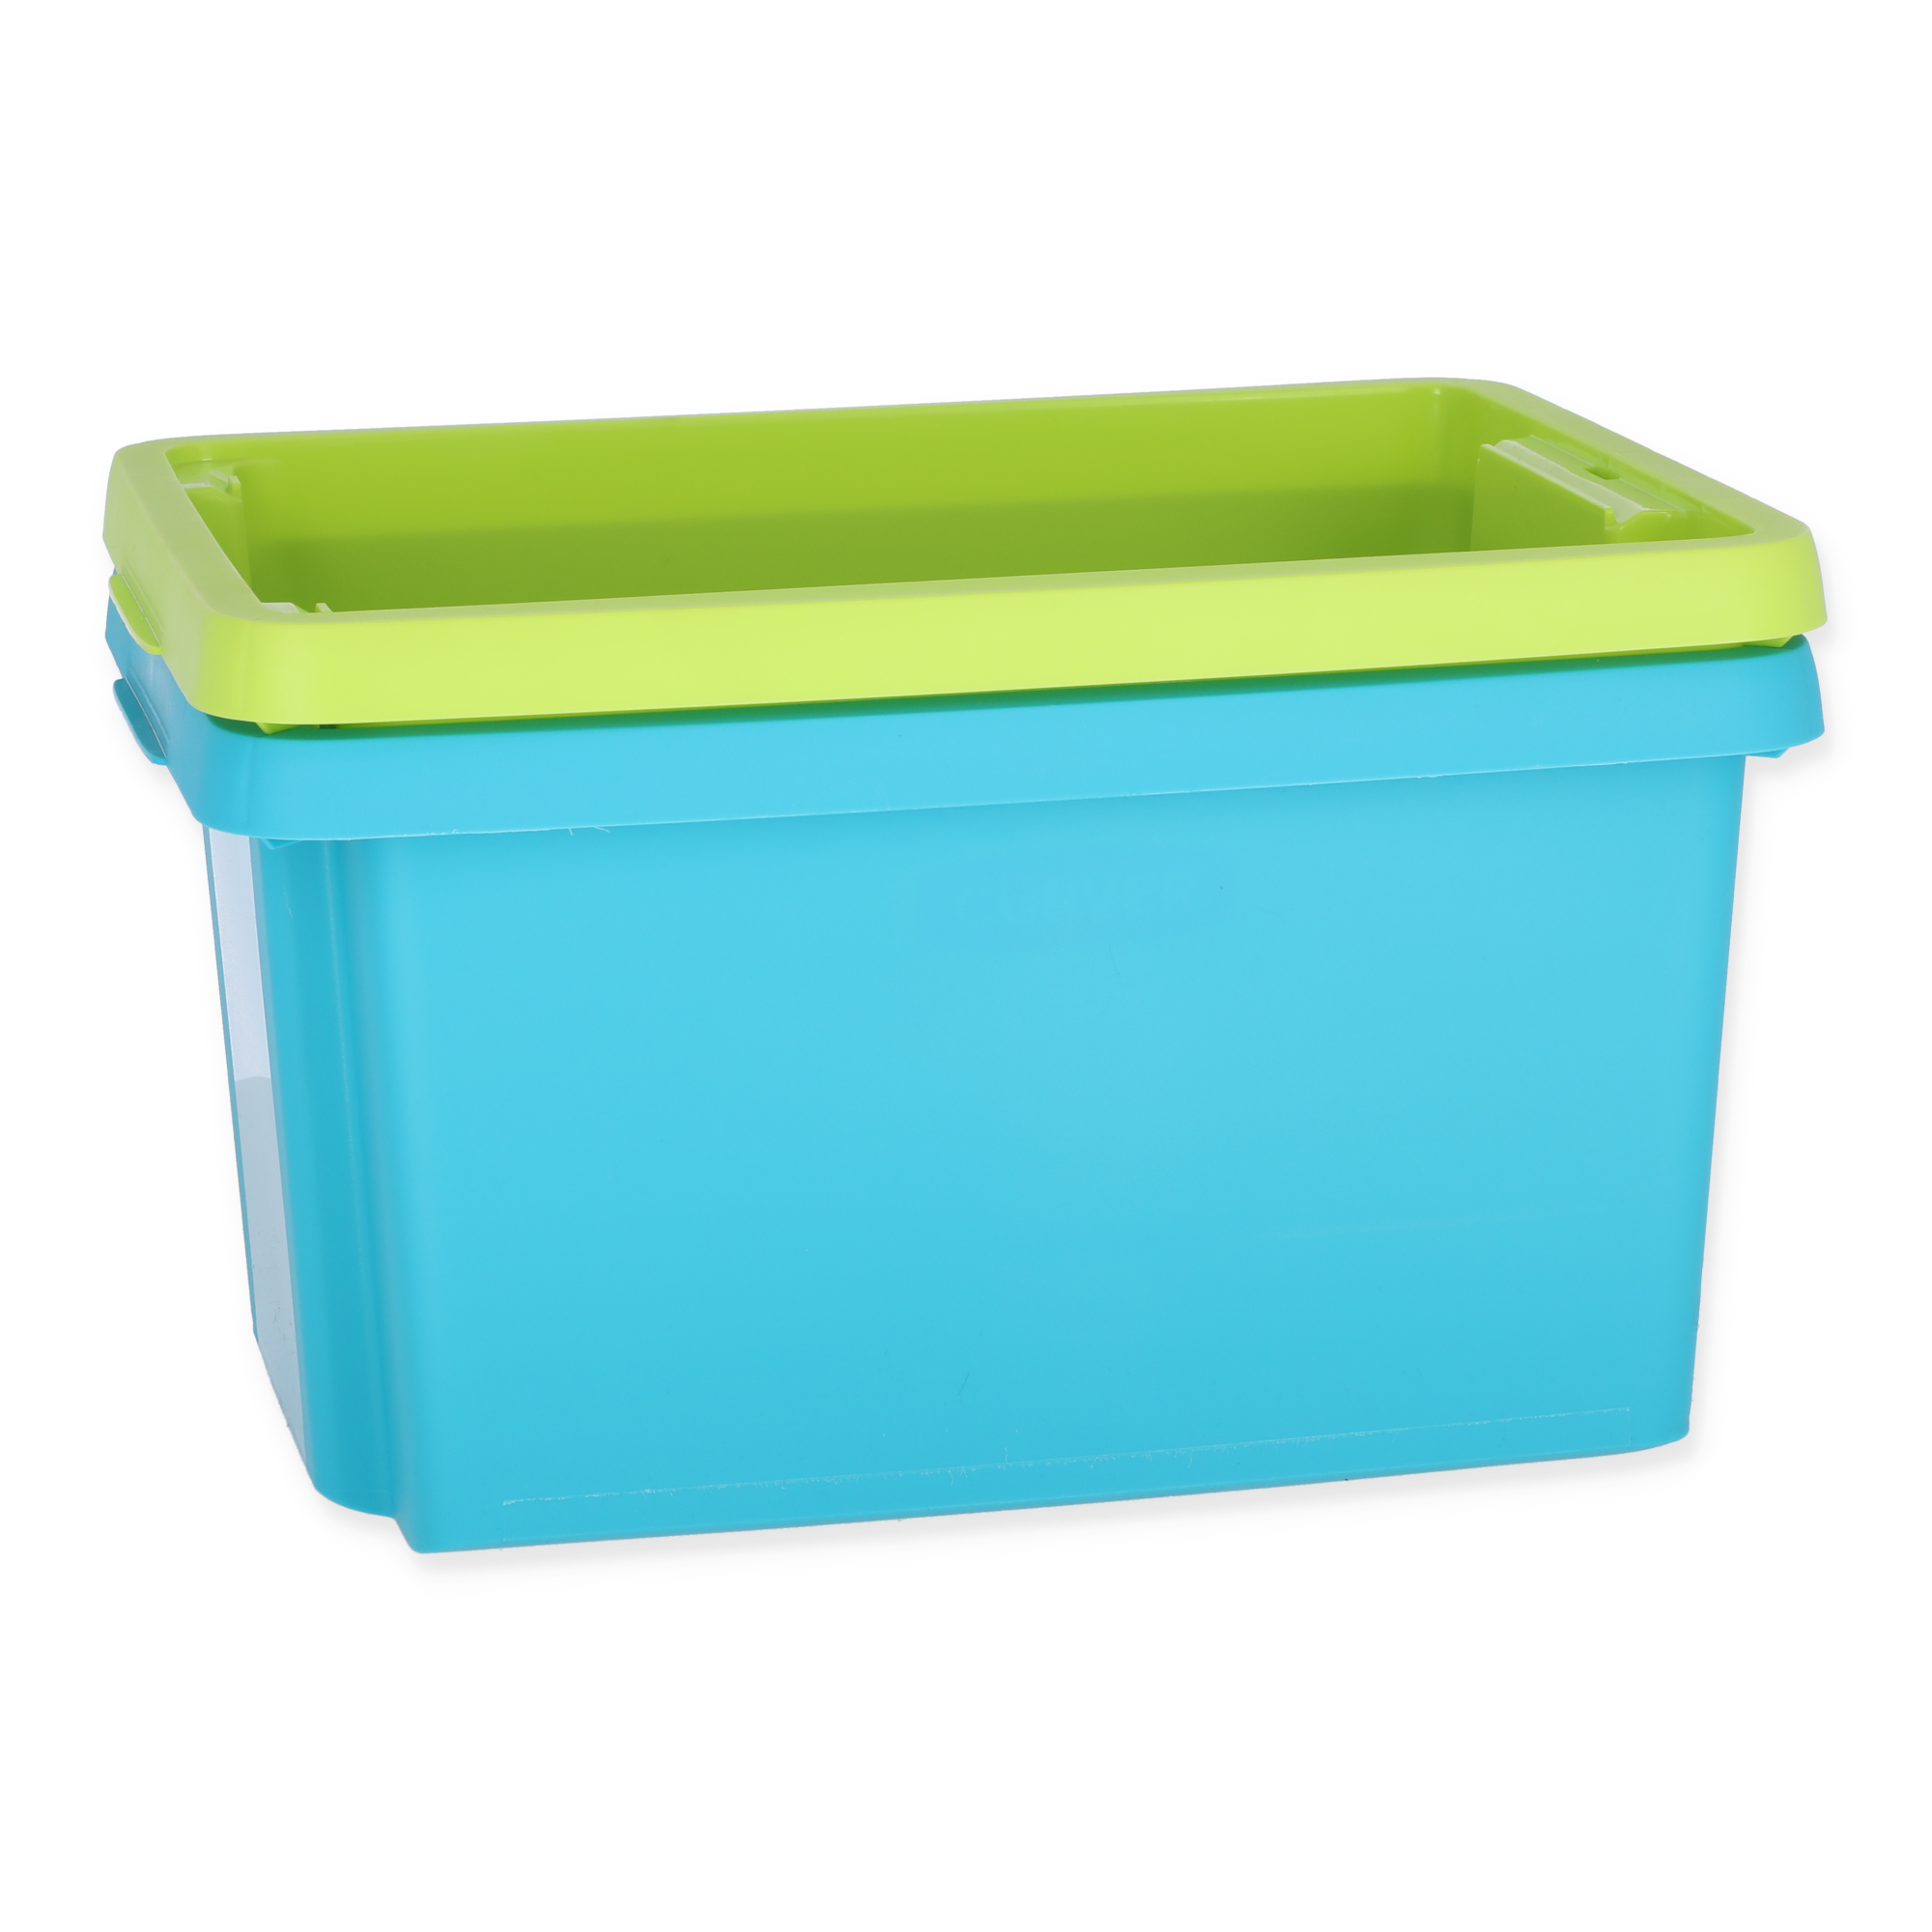 Drehstapelbox 'Essentials' blau 33,5 x 26,2 x 42,5 cm 26 l + product picture